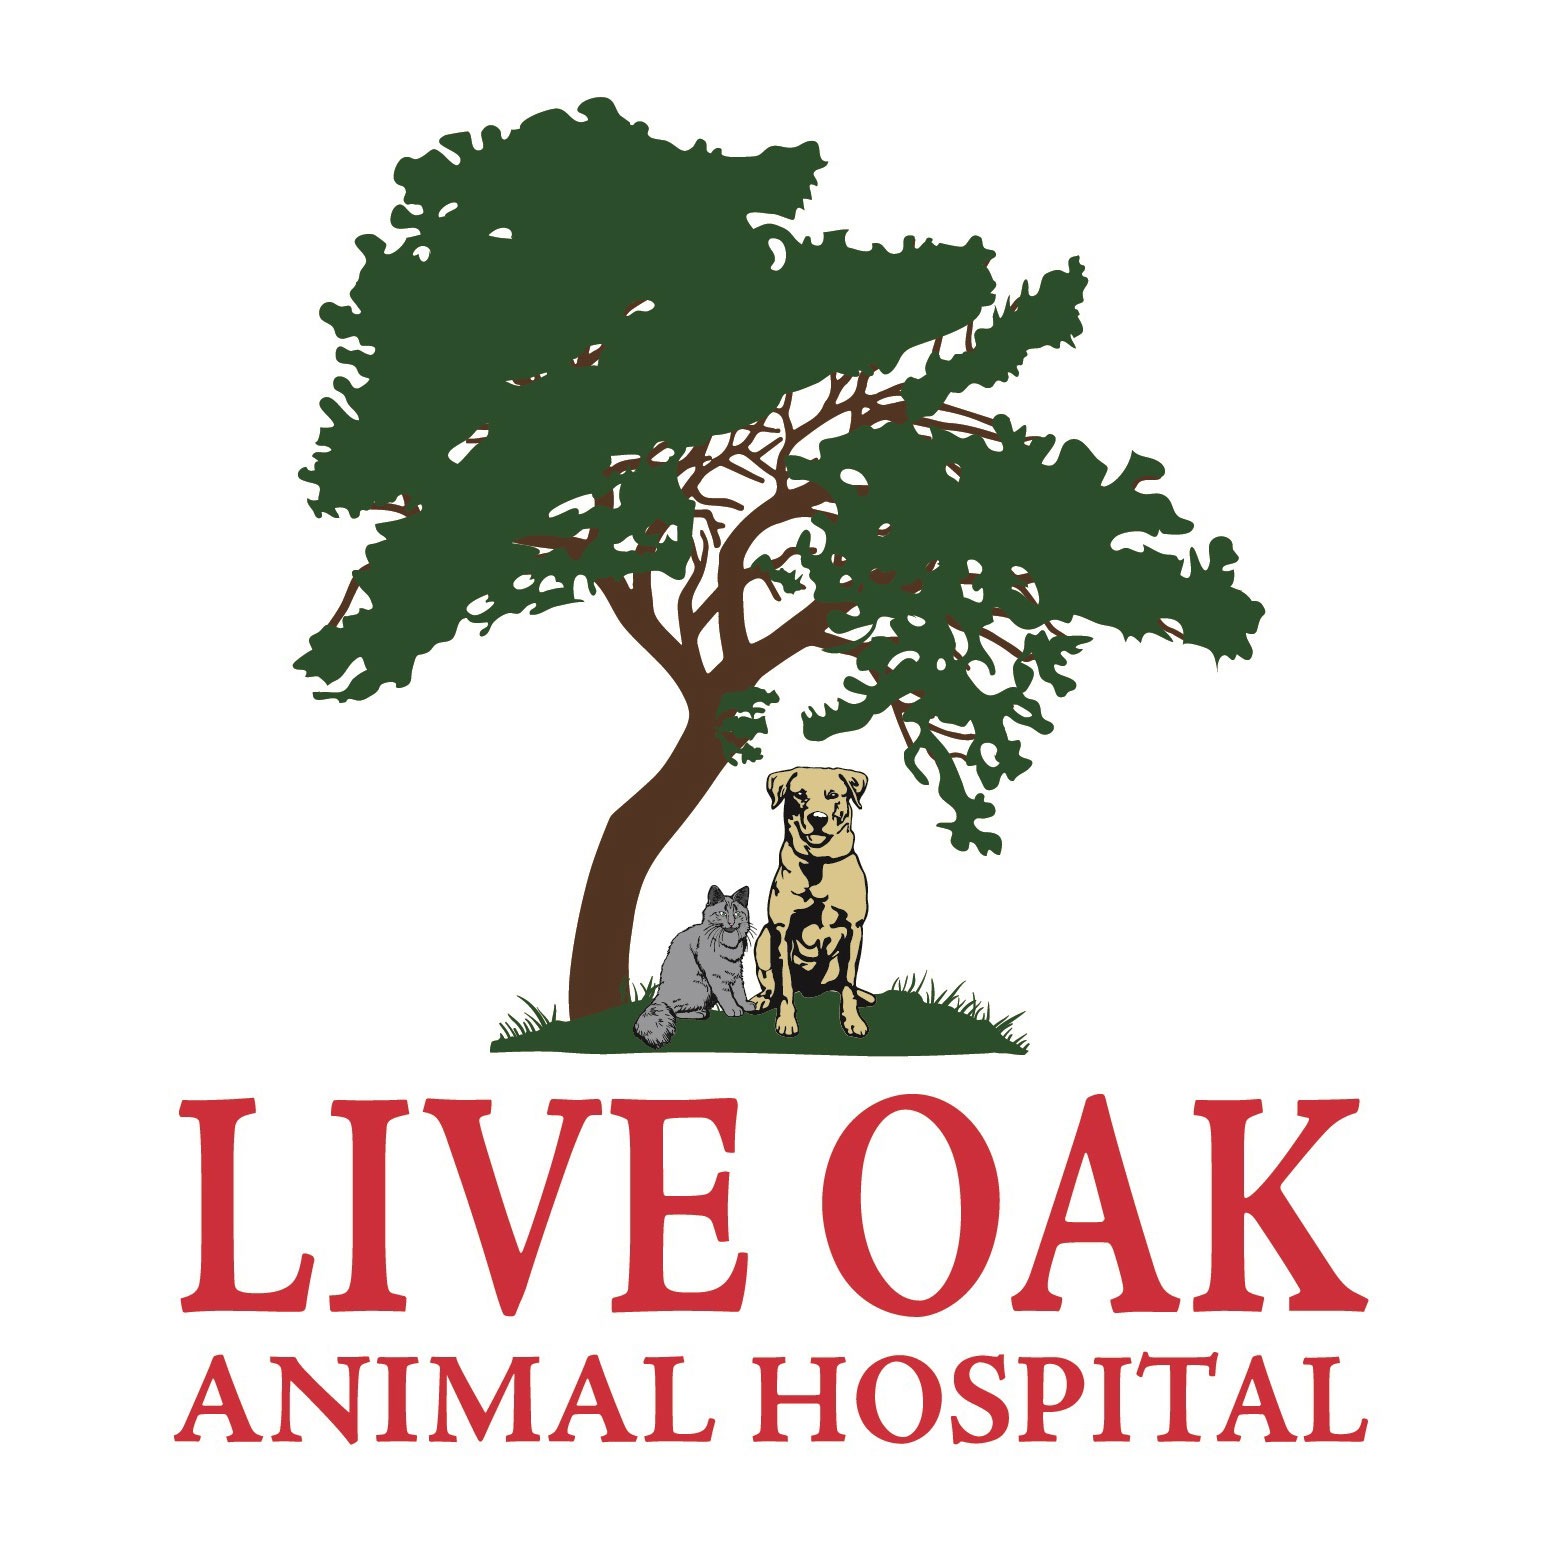 Live Oak Animal Hospital